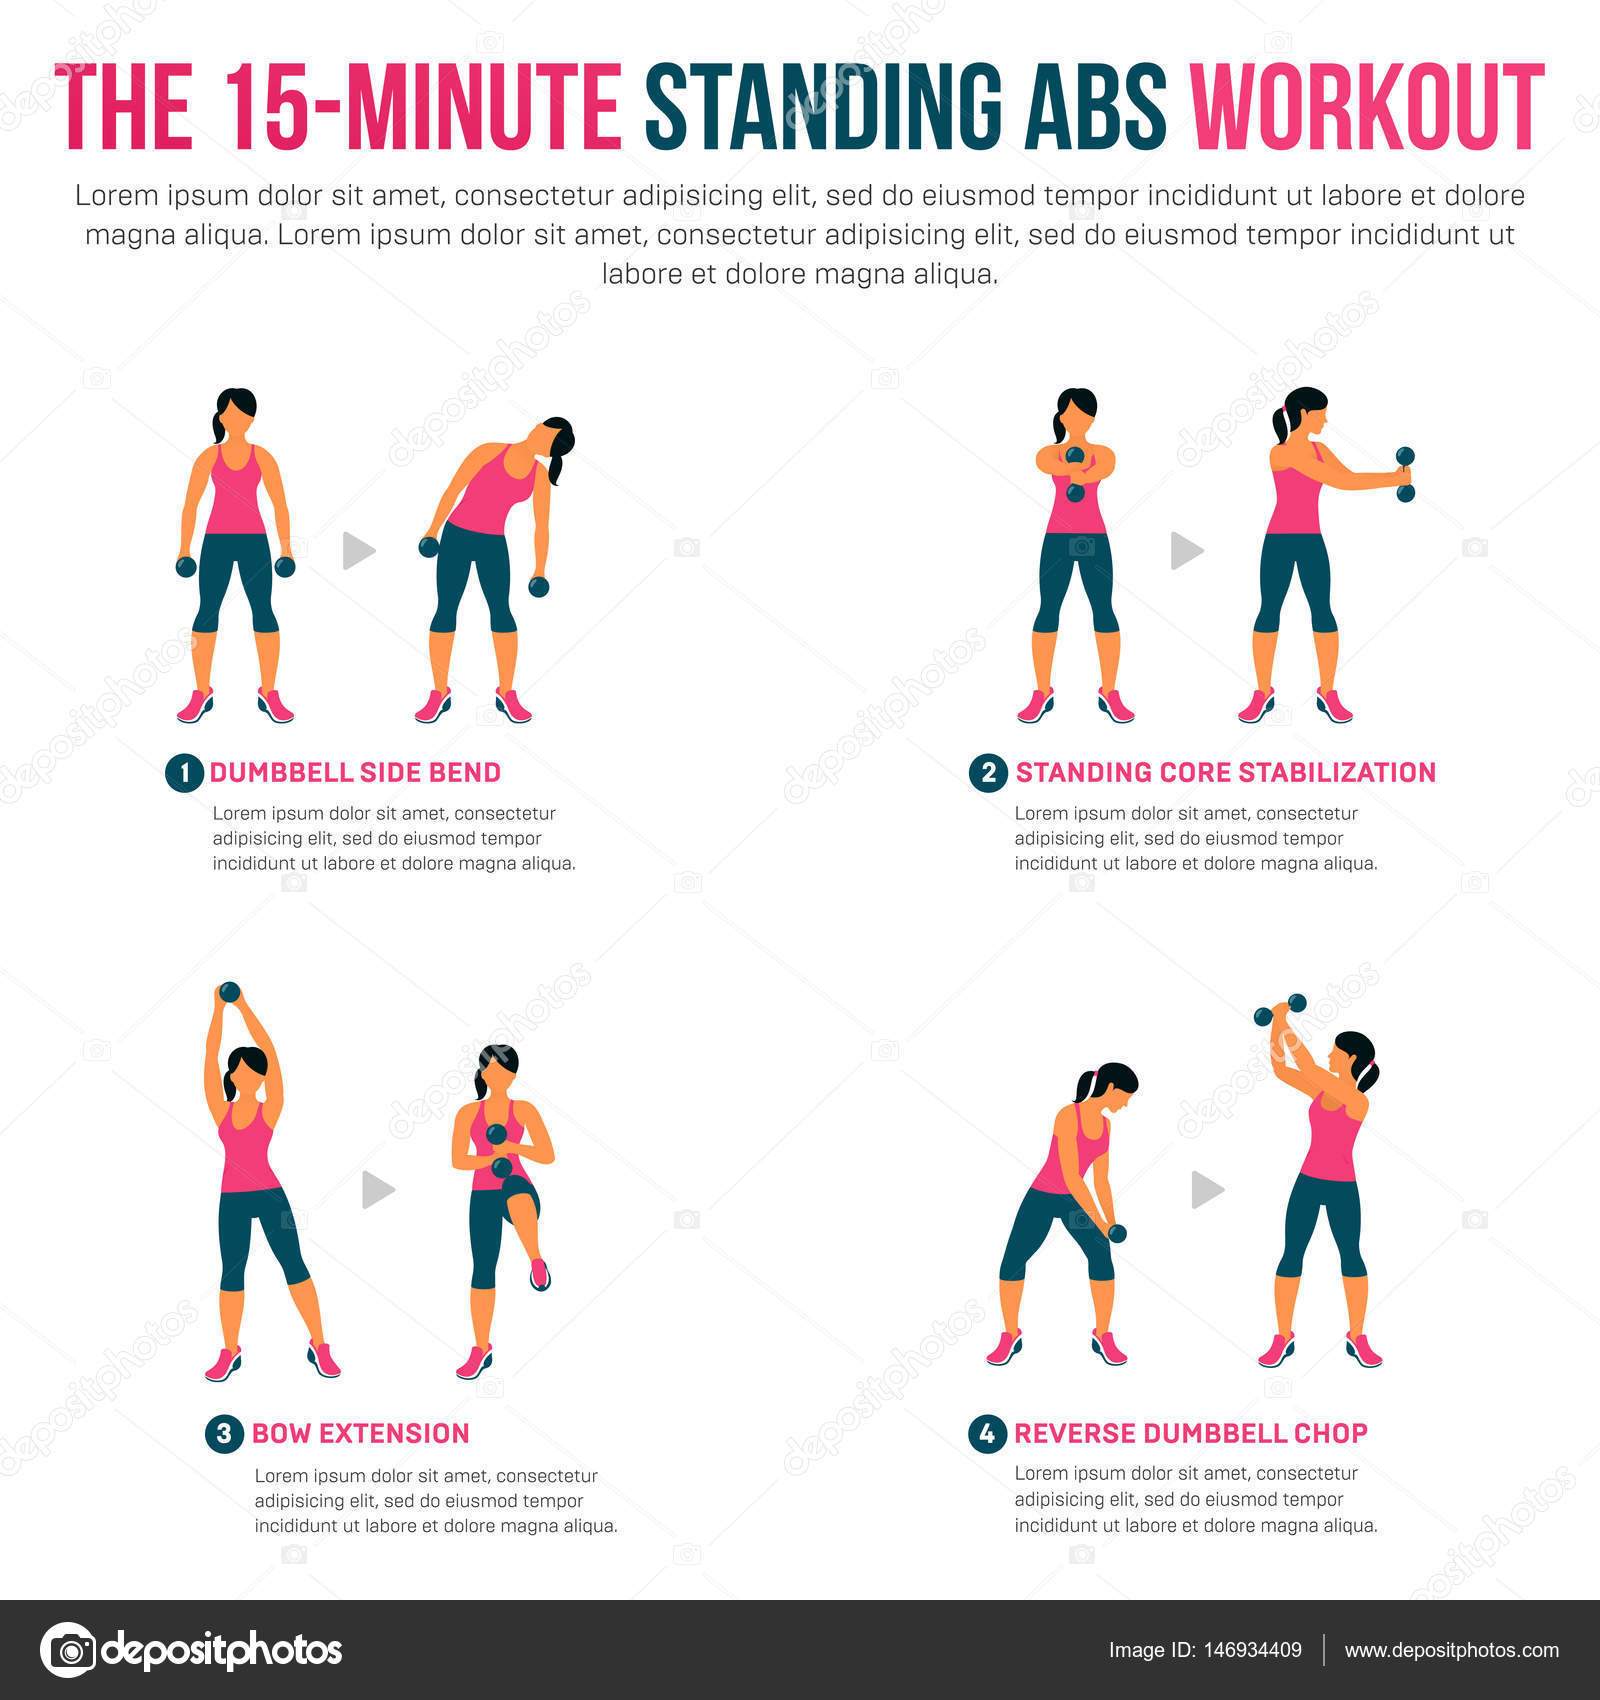 https://st3.depositphotos.com/4197925/14693/v/1600/depositphotos_146934409-stock-illustration-15-minute-standing-abs-workout.jpg